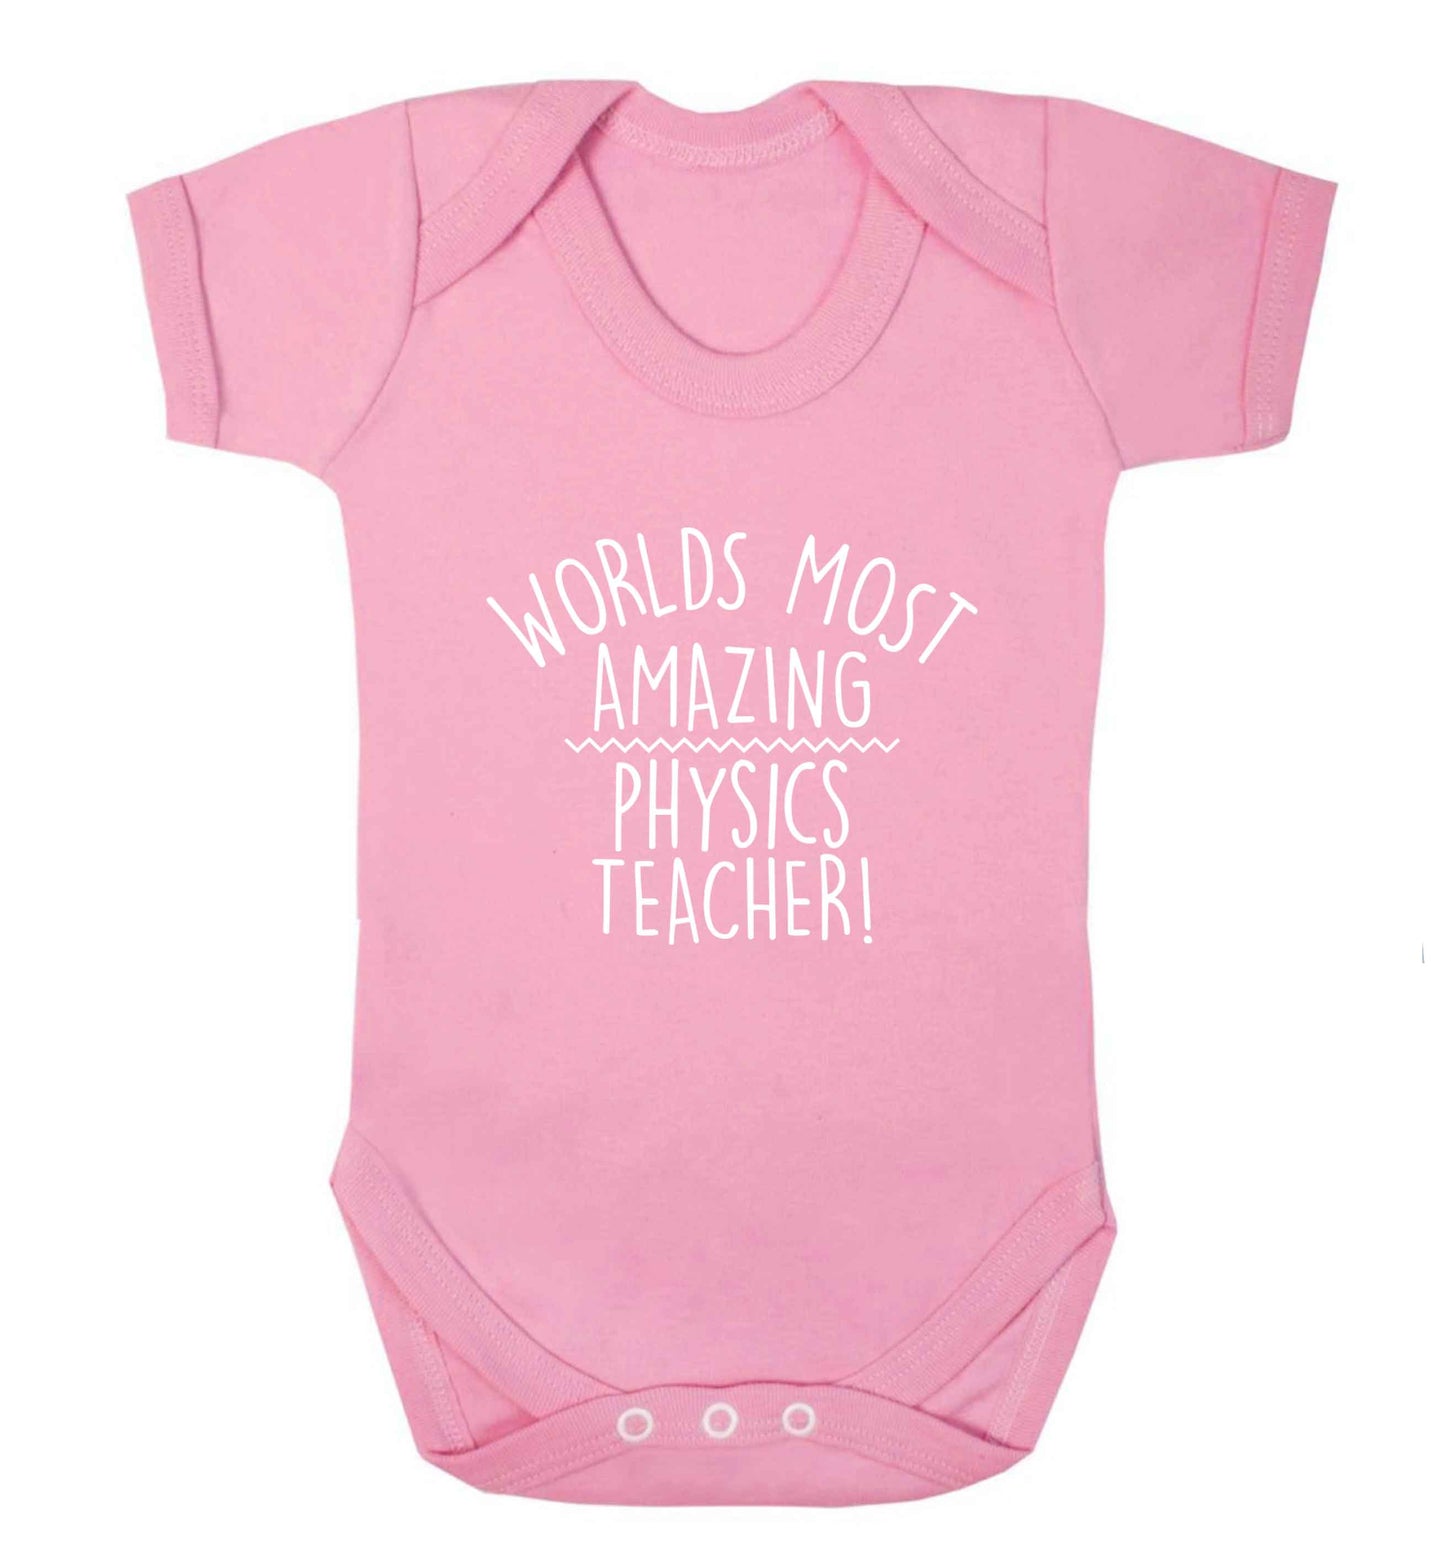 Worlds most amazing physics teacher baby vest pale pink 18-24 months